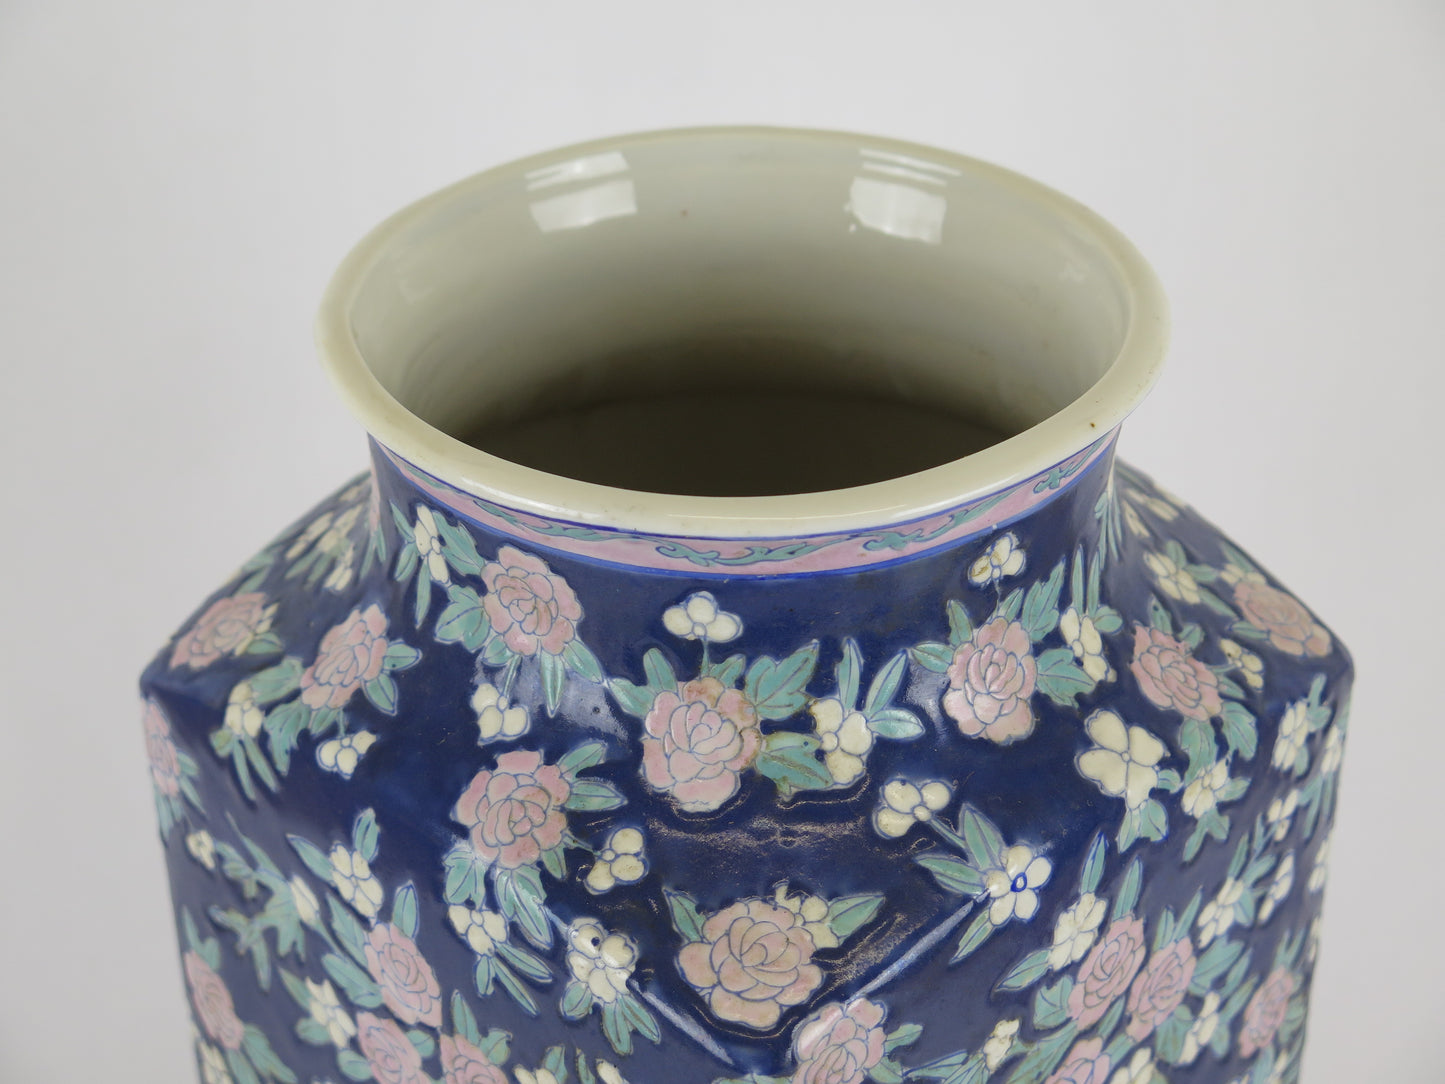 Large hand-painted ceramic vase with flowers Chinese ceramic vase China Asia vintage CM7 n4